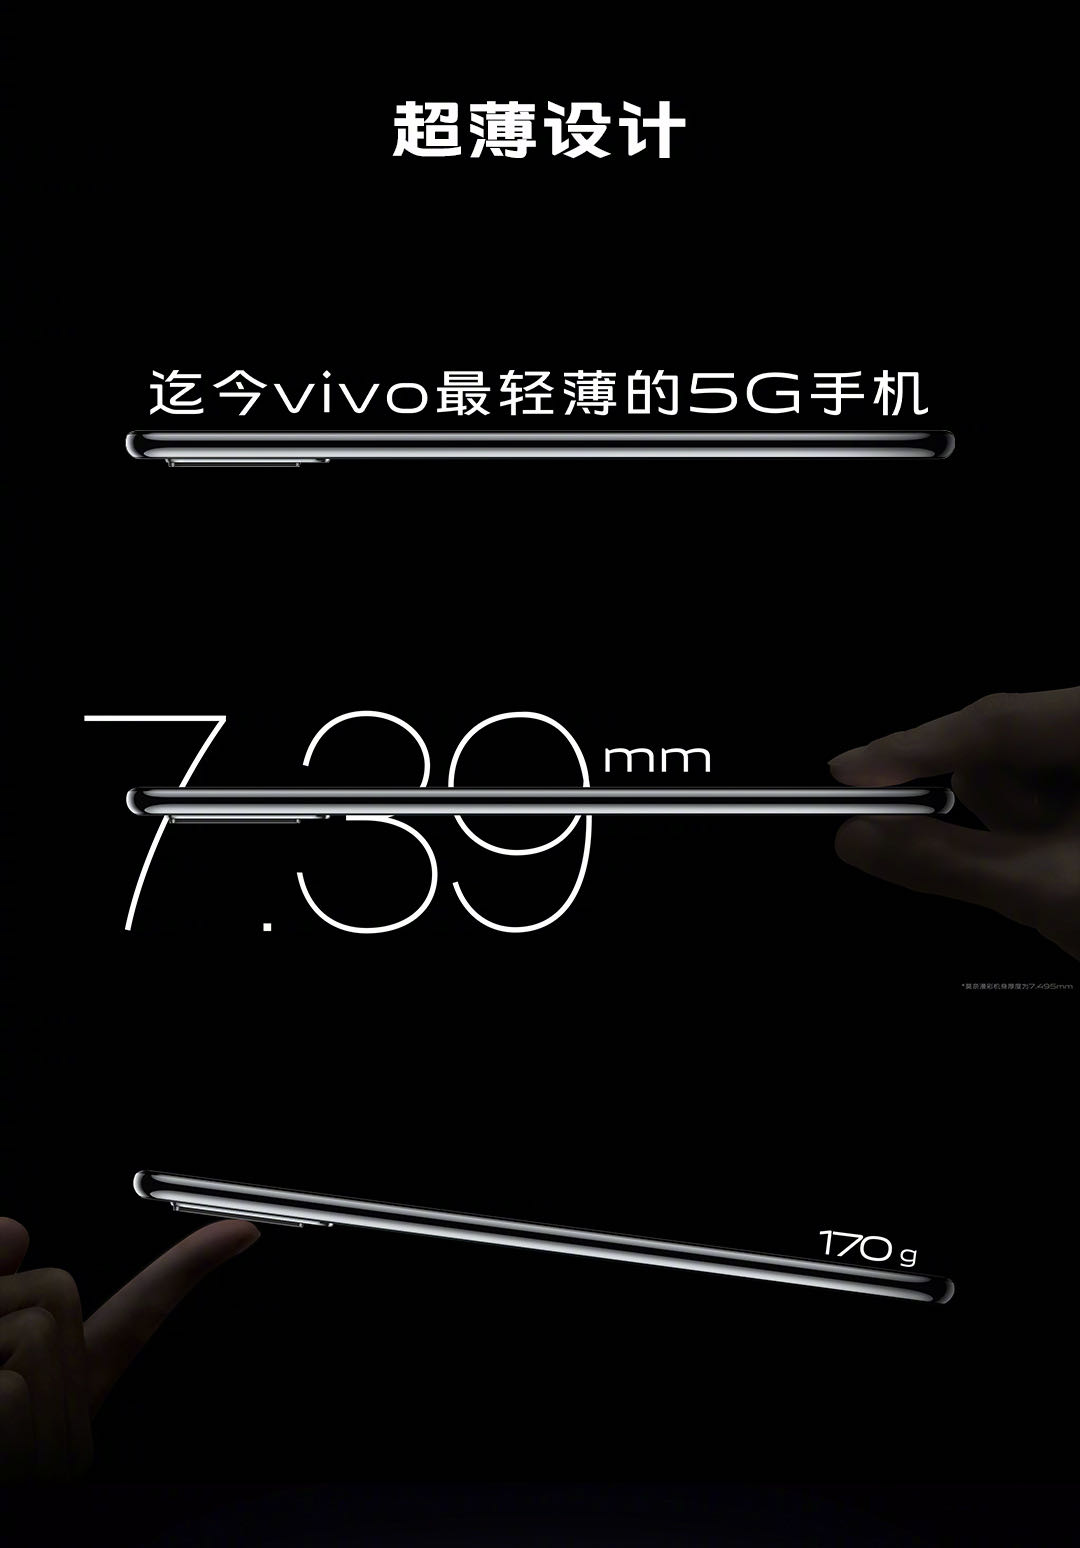 vivos7正式发布739mm超薄5g手机售价2798元起